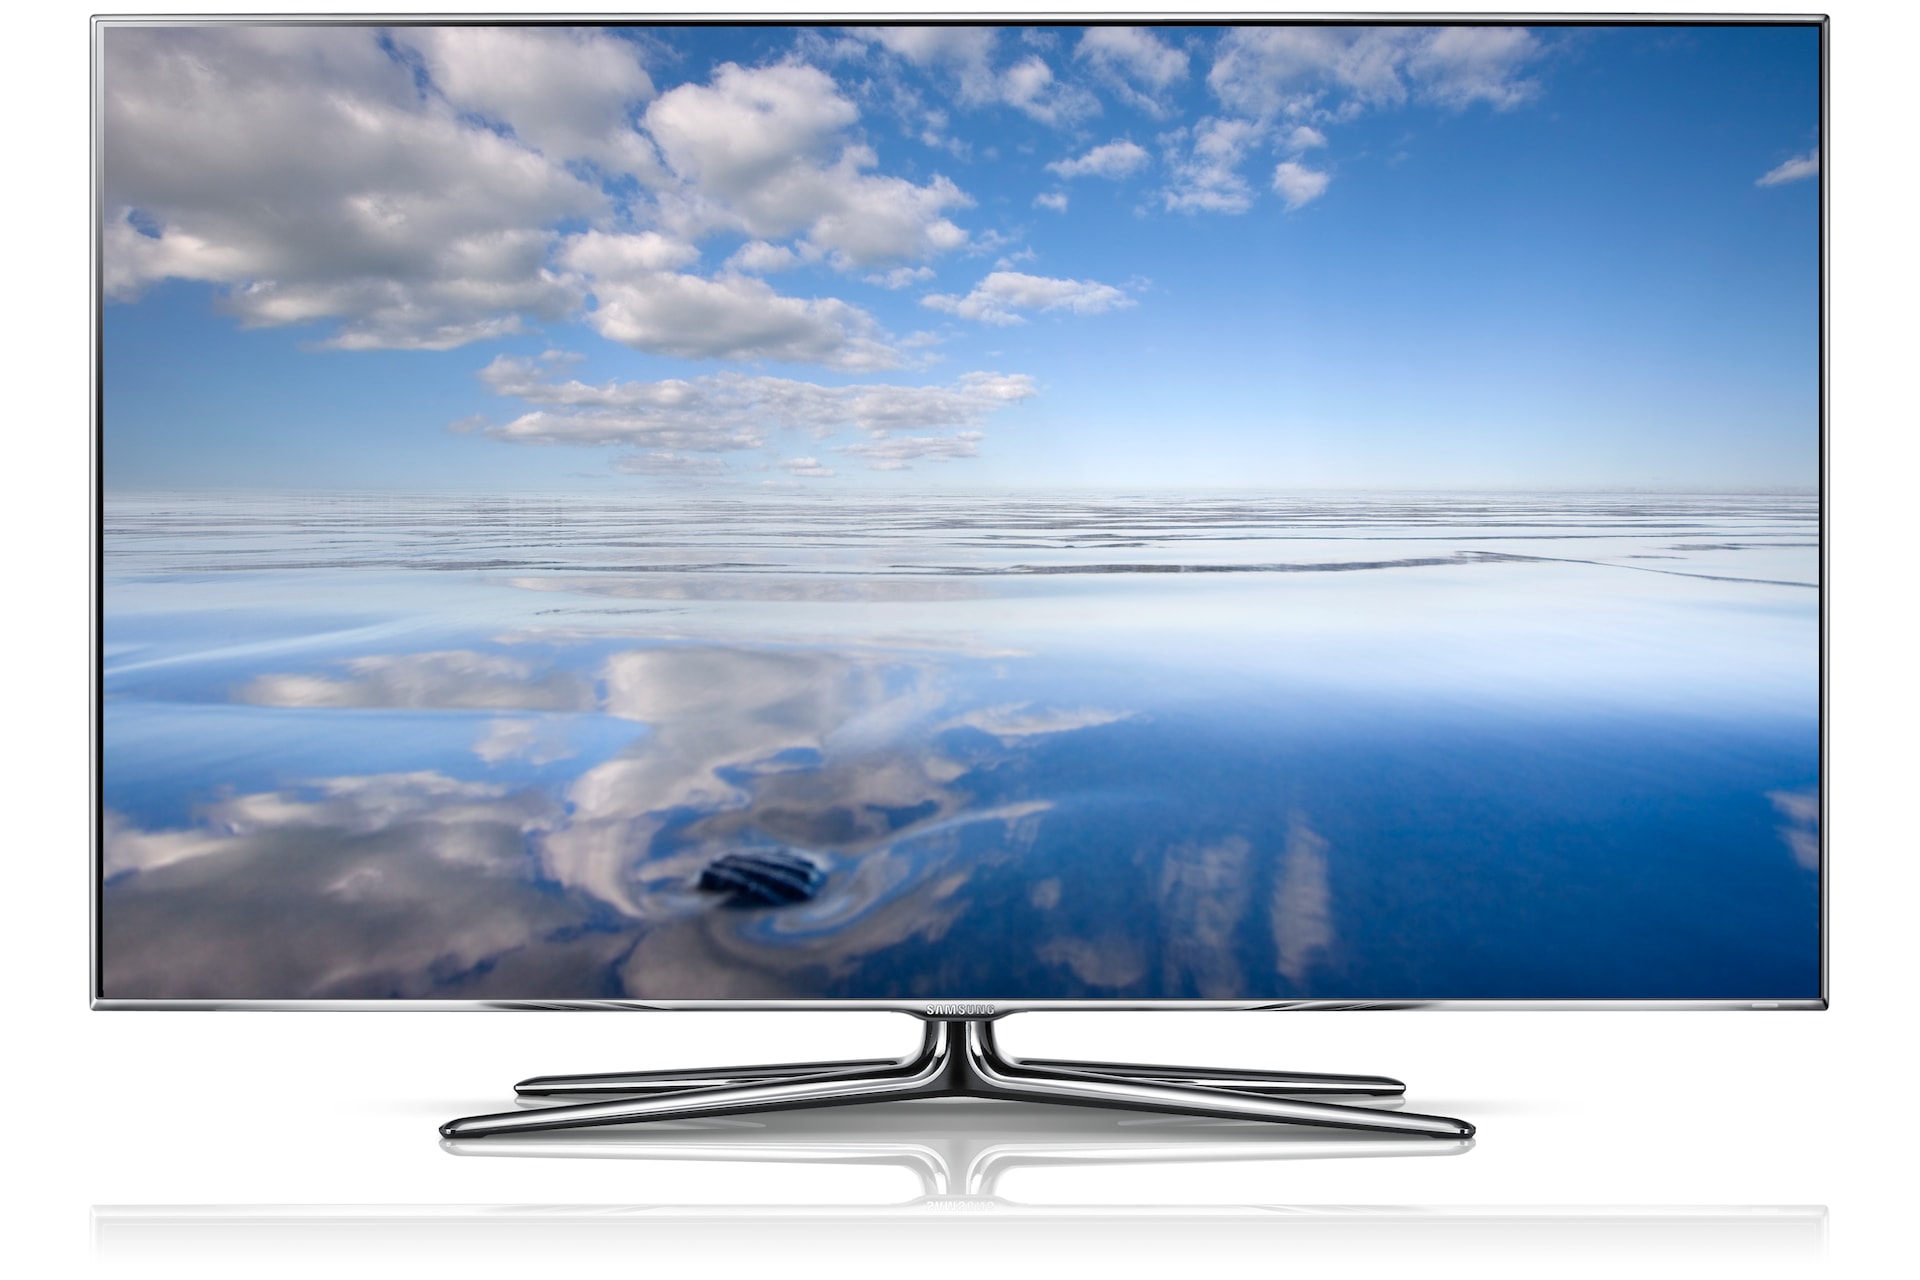 LED TV SAMSUNG 46'' 3D UE46F8000 SMART TV WIFI FULL HD TDT HD DUAL CORE 3  HDMI 3USB VIDEO CAMARA 2 GAFAS 3D MANDO PREMIUM - Caja Registradora 